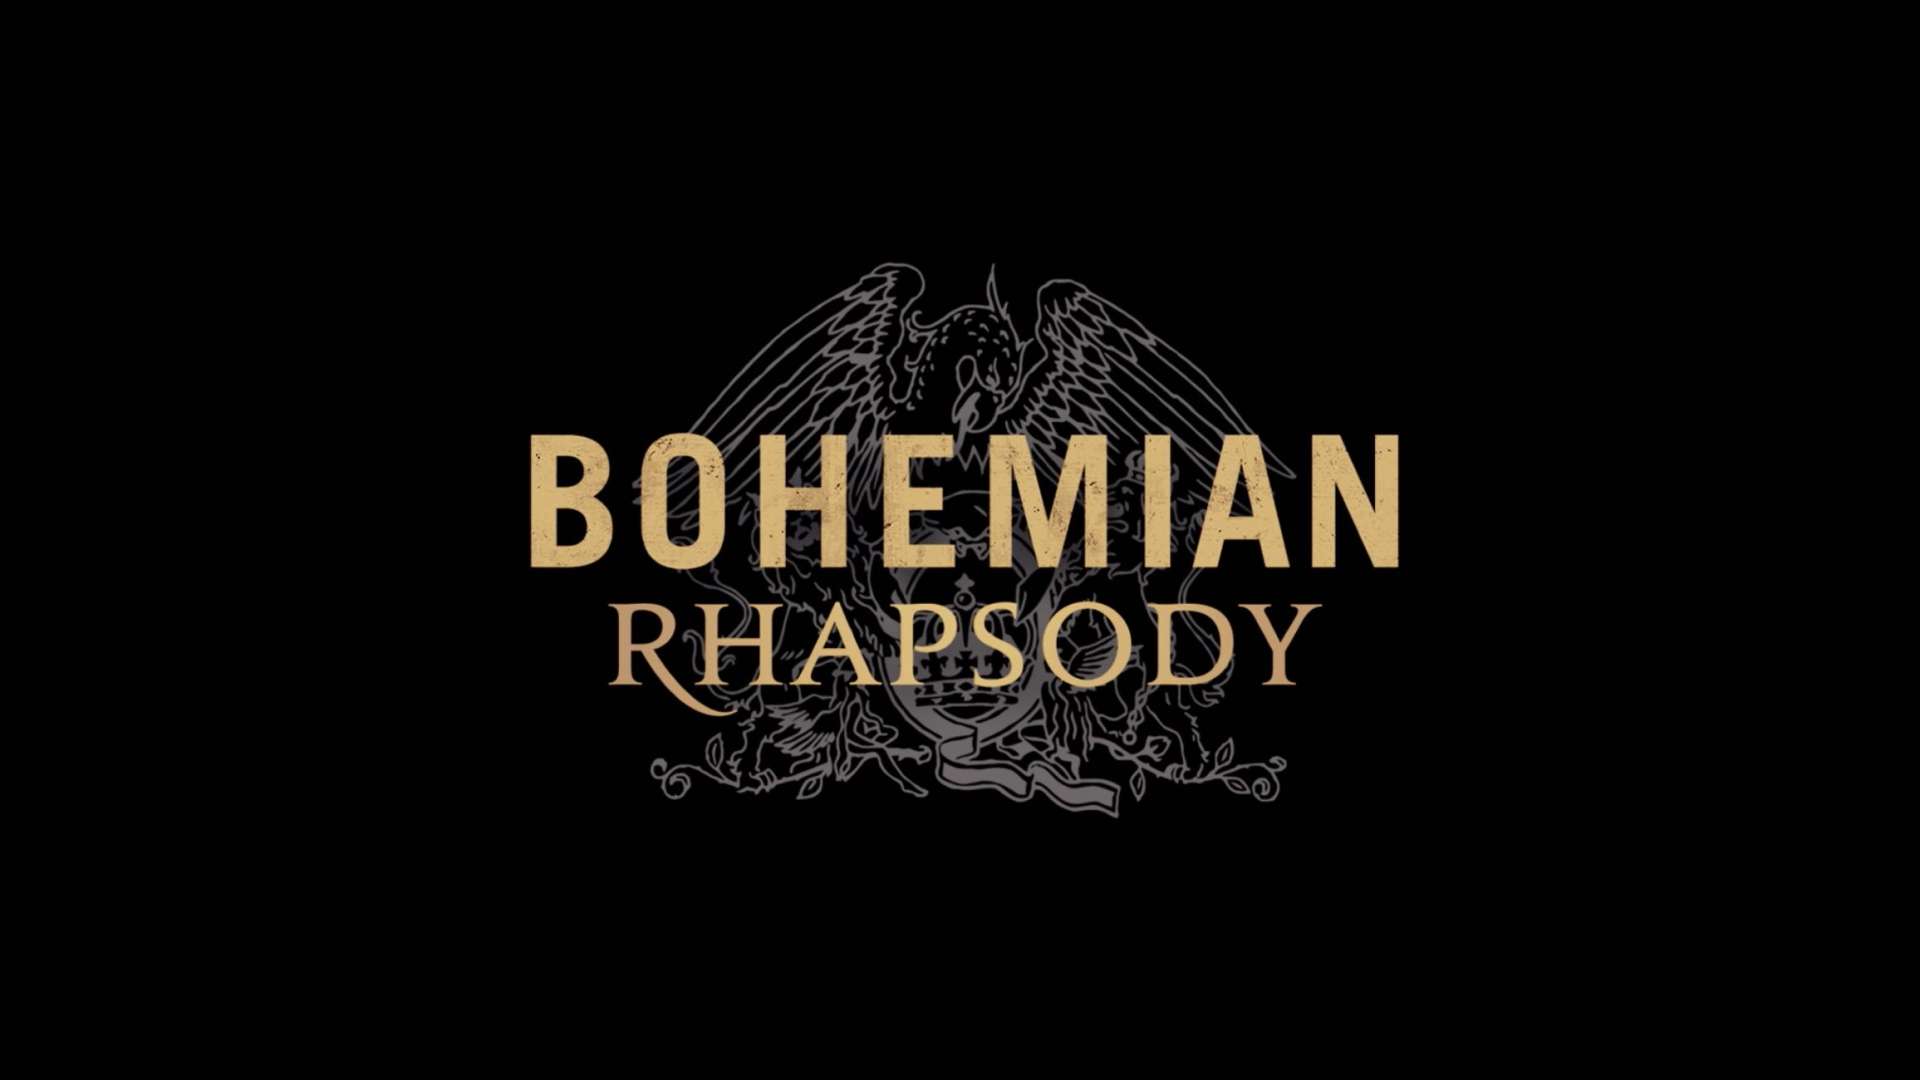 BohemianRhapsody_documentary 波西米亚狂想曲预告